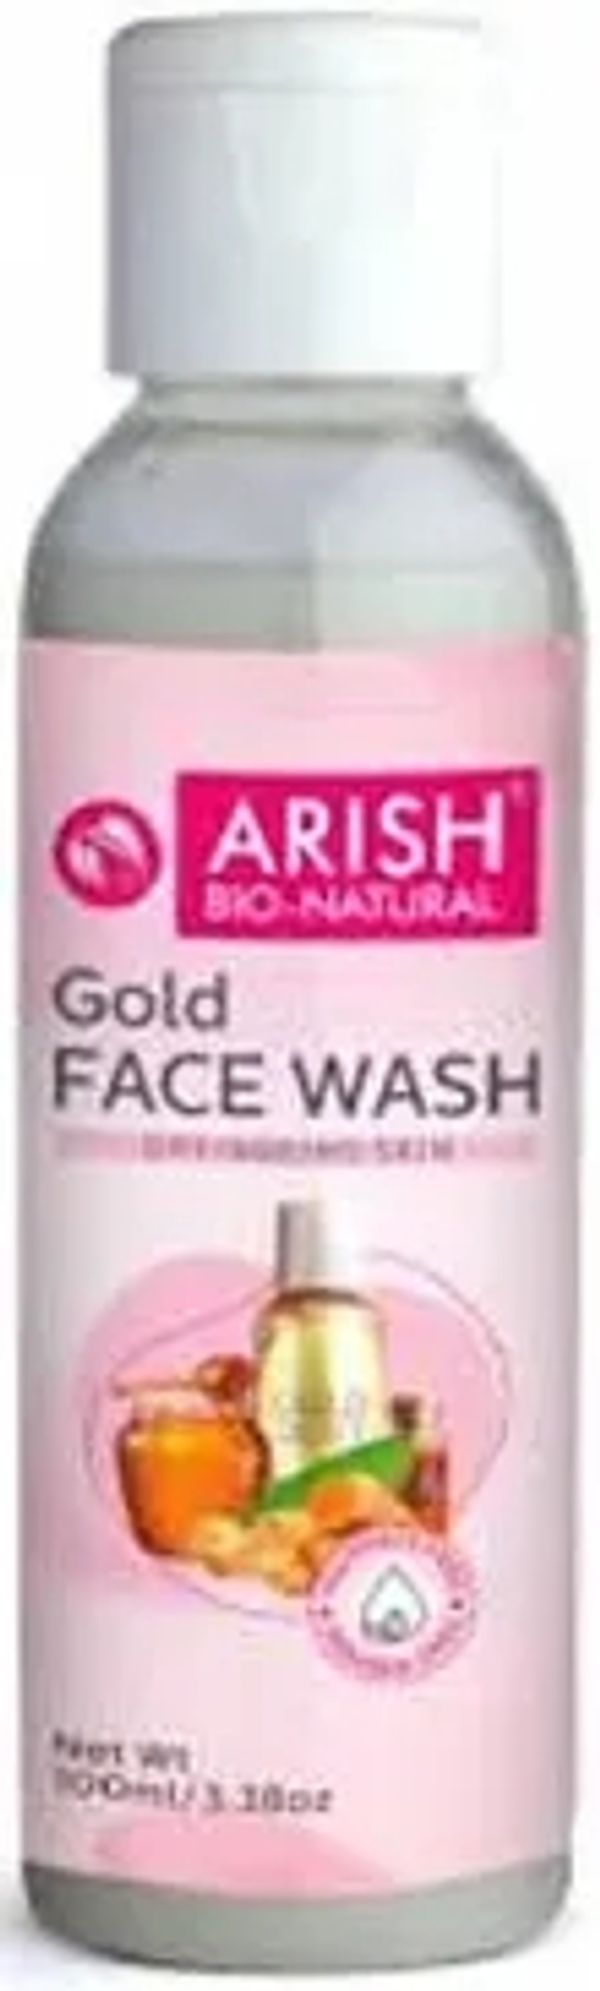 Arish Gold Face Wash 100ml Arish Bio-Natural Gold Face Wash Dry Ageing Skin 100ml